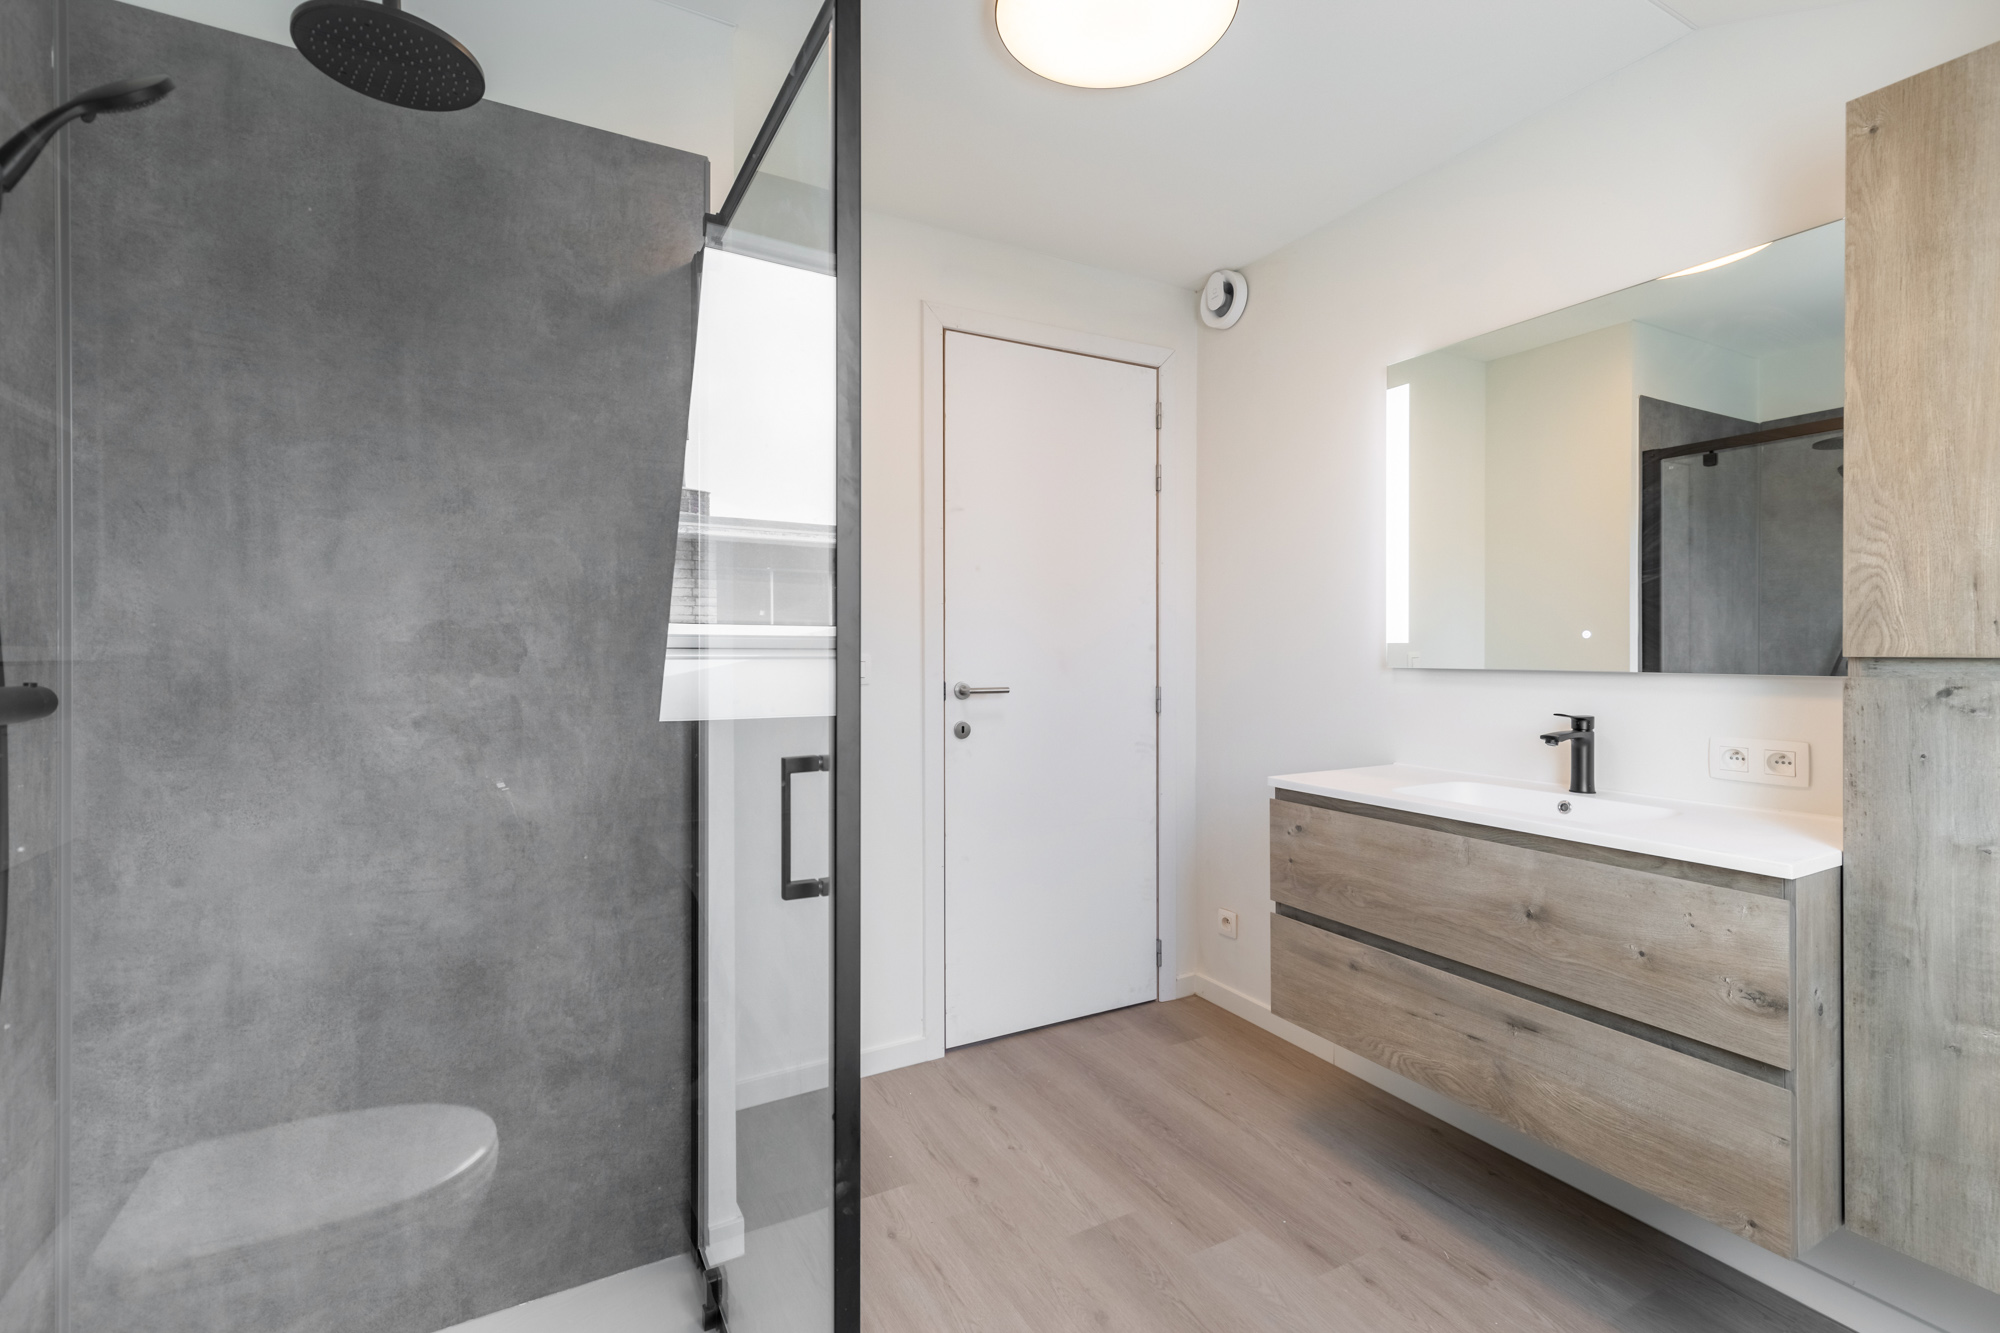 IDEALIS VASTGOED – Charmante en volledig gerenoveerde woning met een gezellige leefruimte, uitgeruste keuken, knappe slaapkamer én ruime badkamer! foto 17